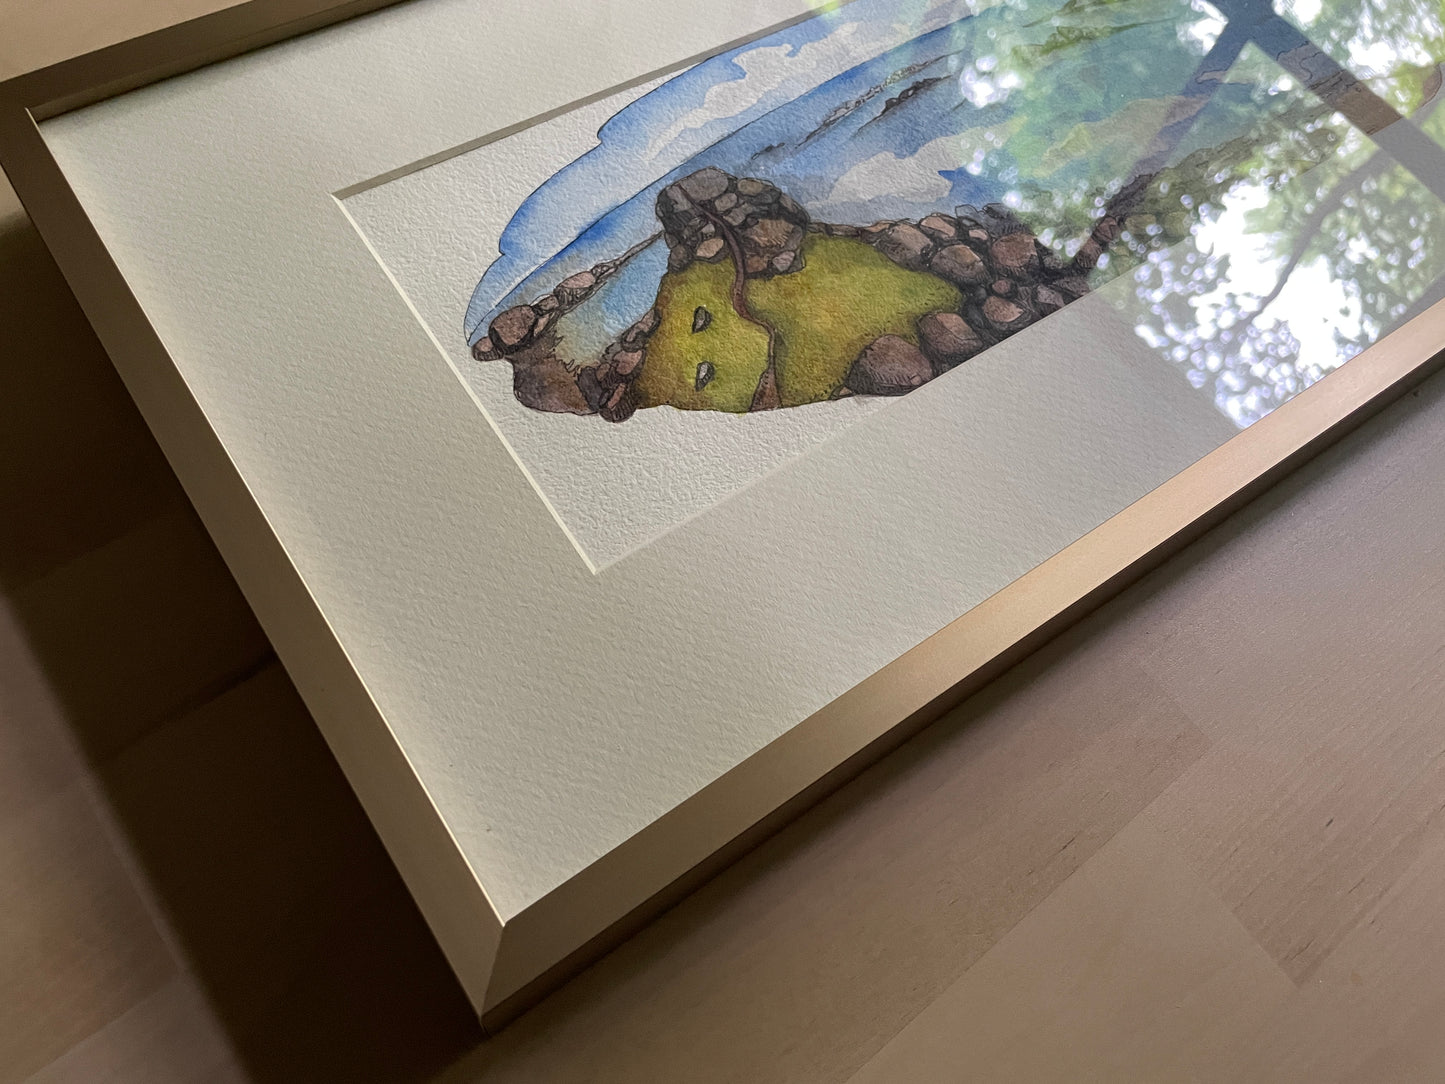 On a Rocky Shore in Scotland, framed ORIGINAL watercolor